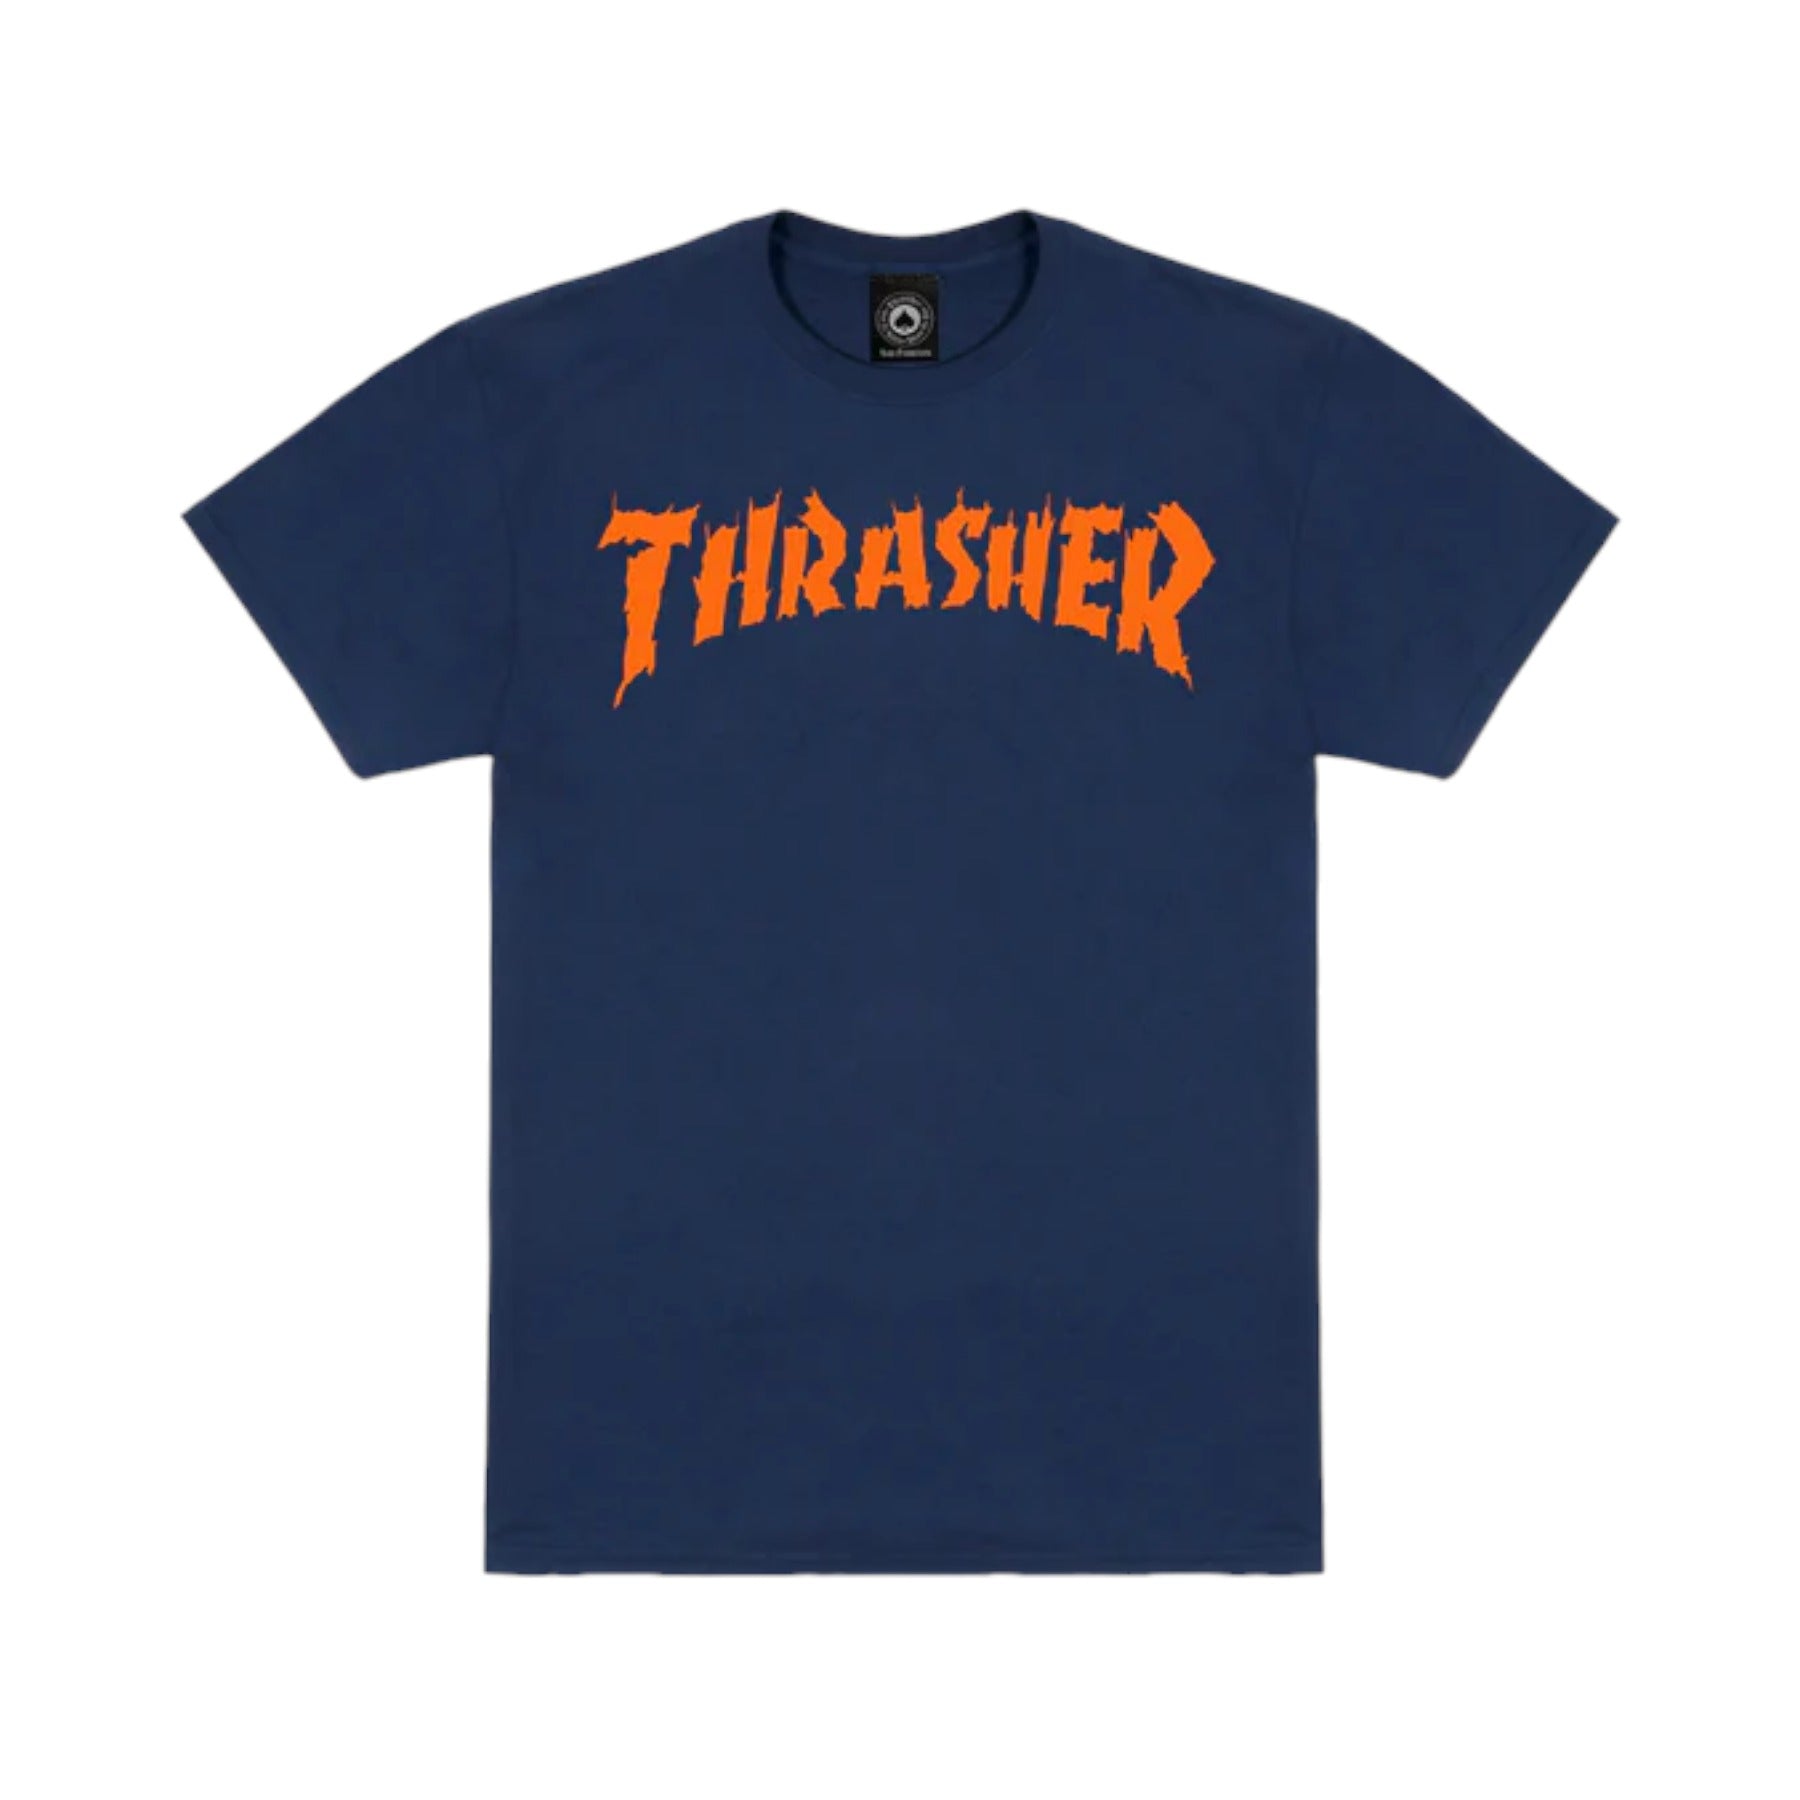 Thrasher Burn It Down S/S Tee - Navy